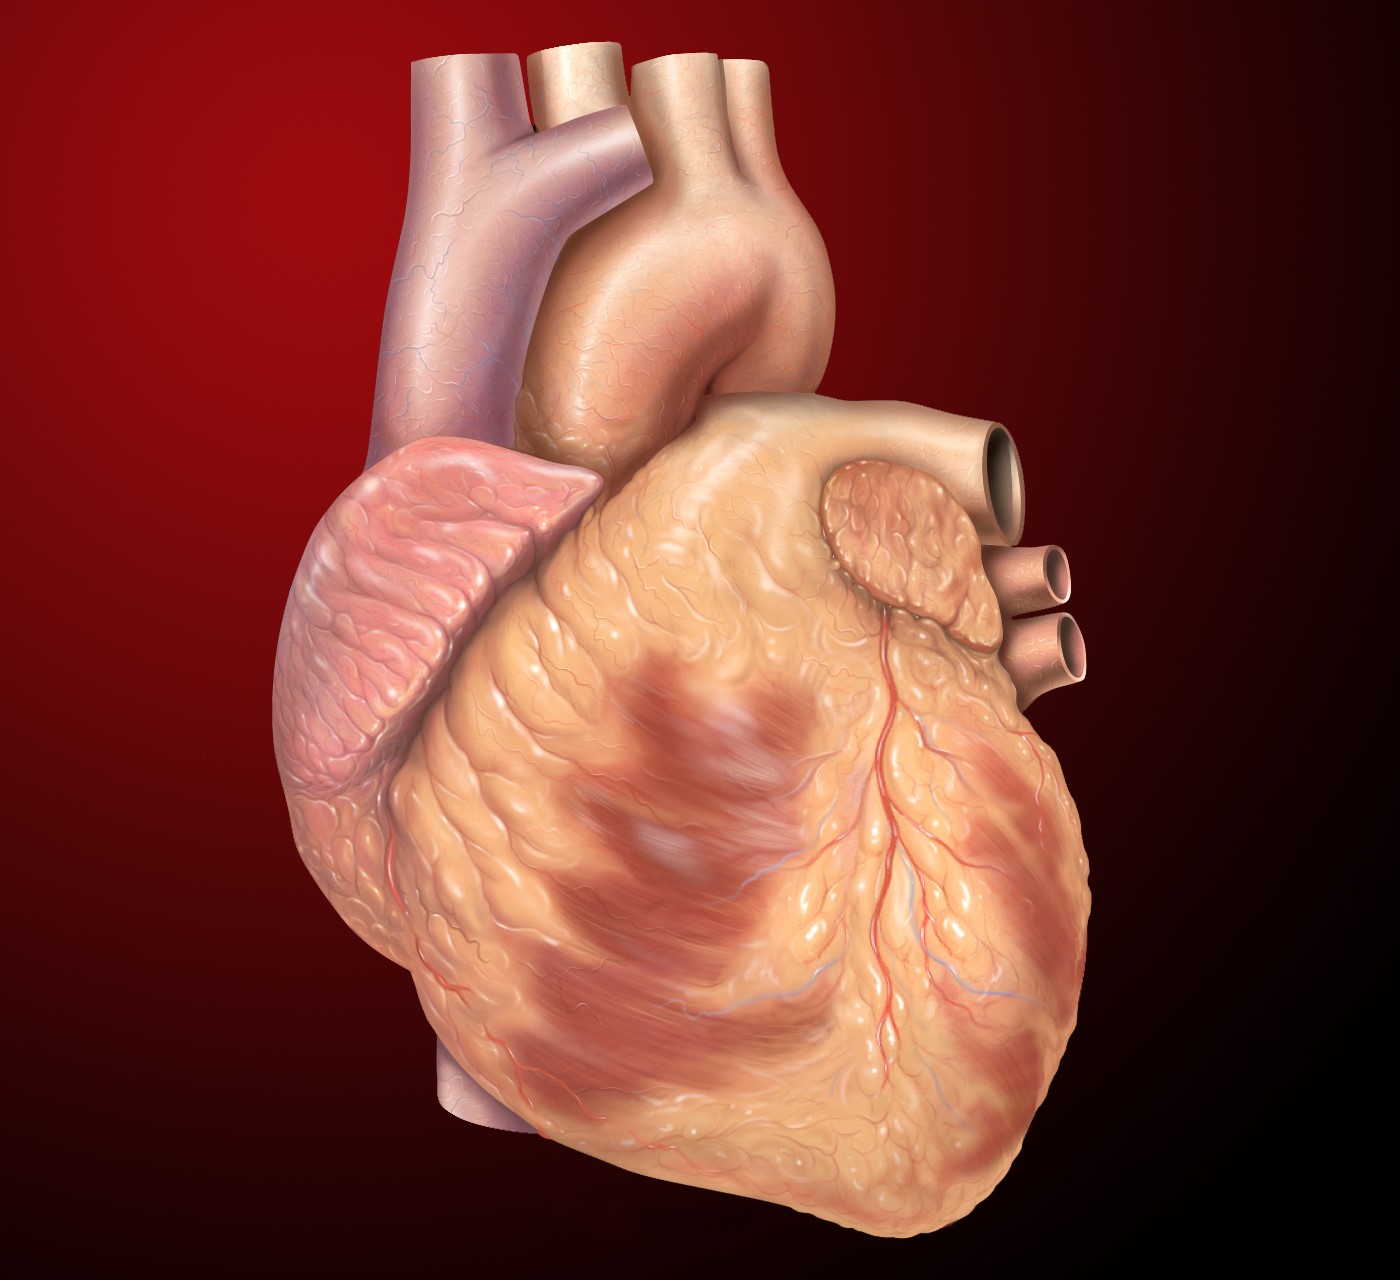 An illustration of a human heart.